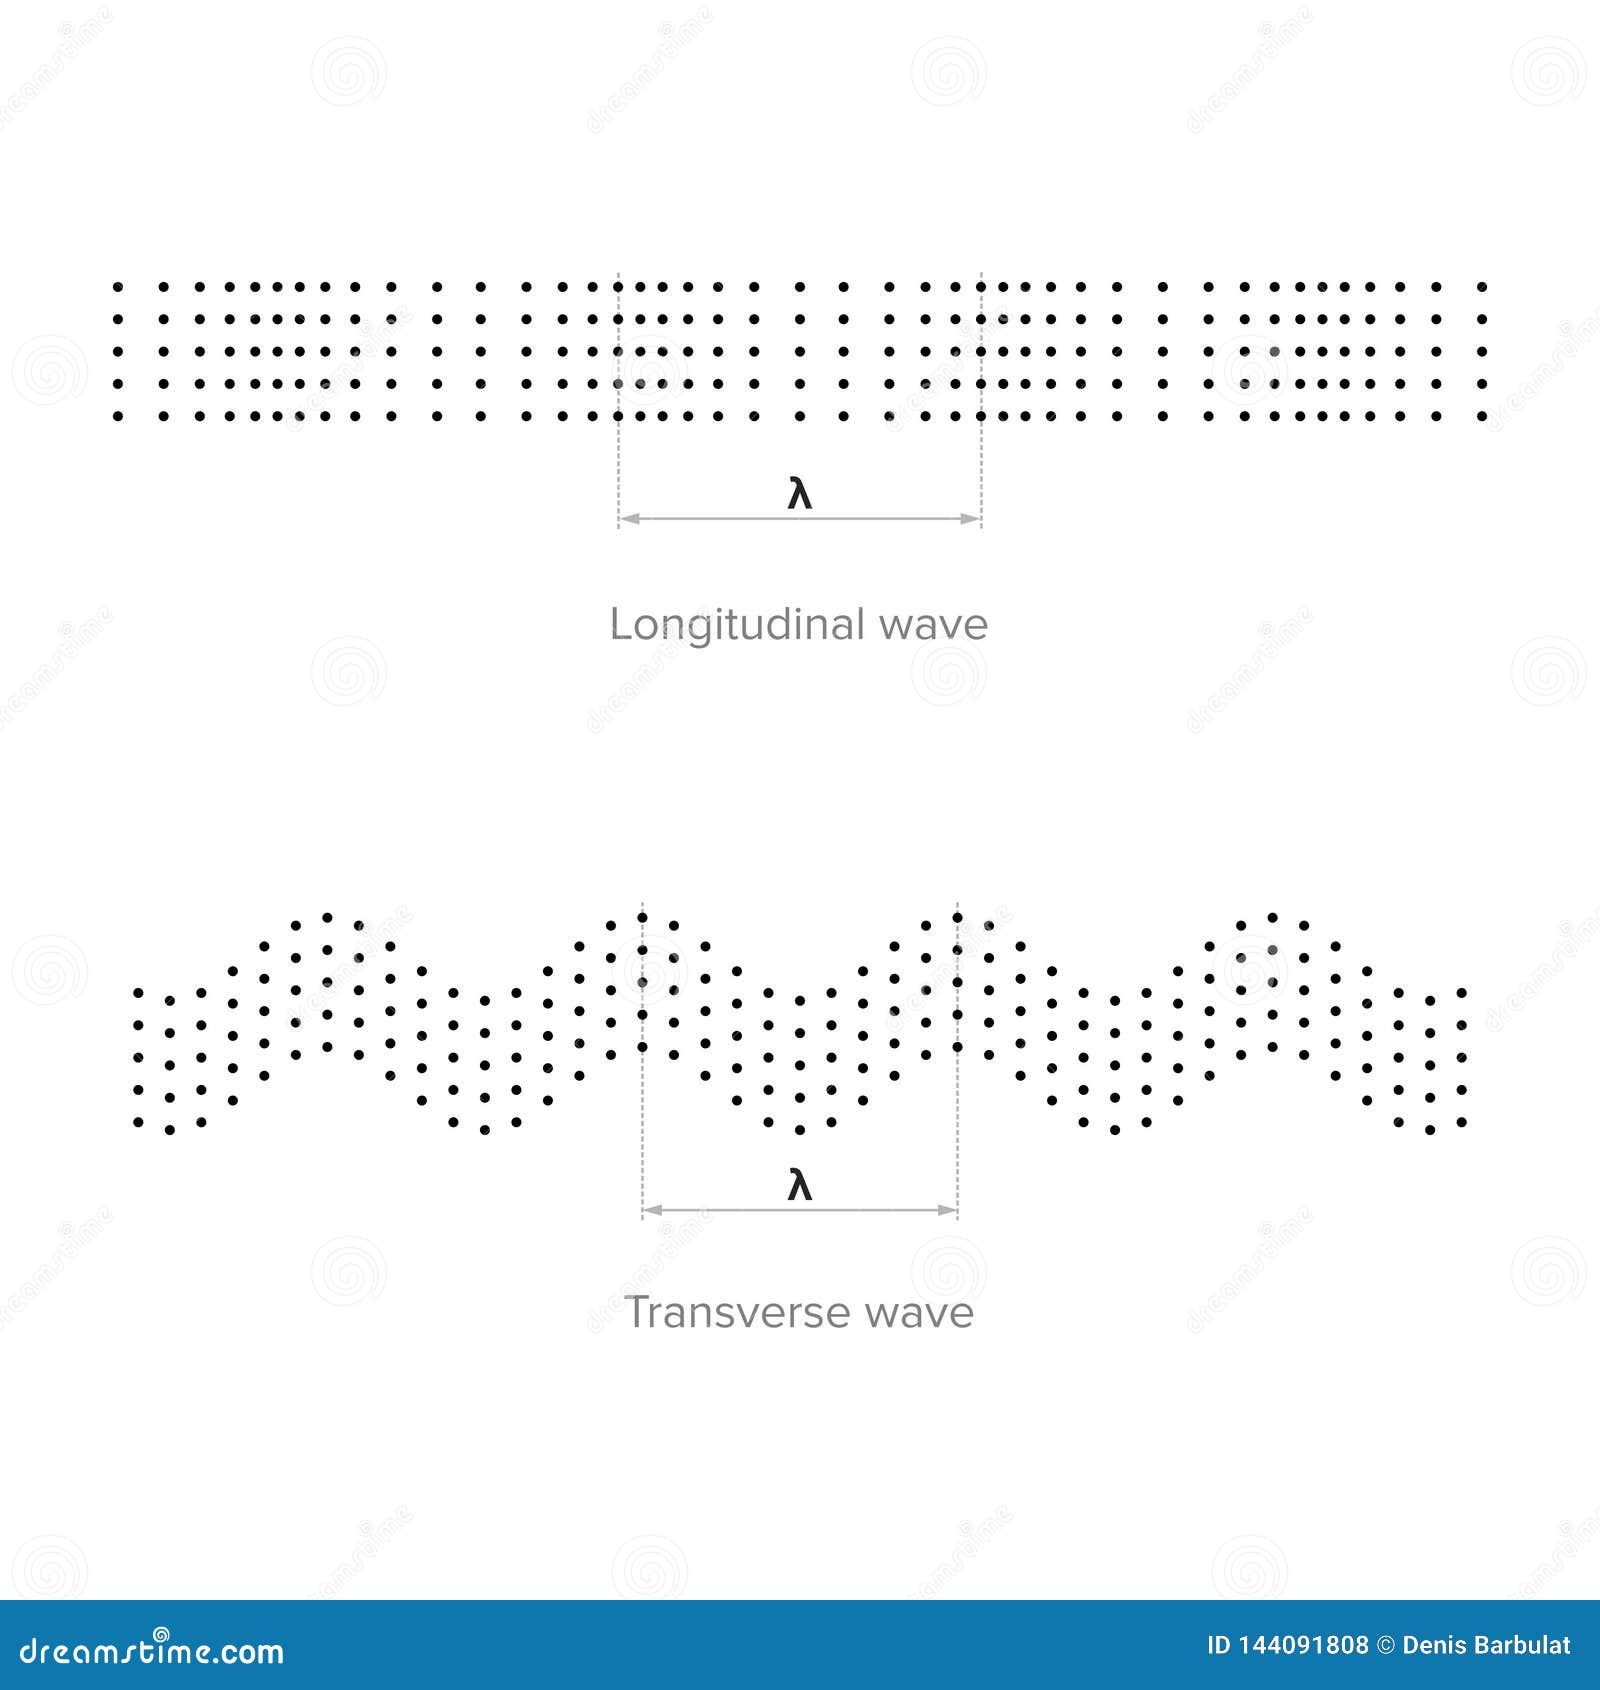 longitudinal and transverse waves